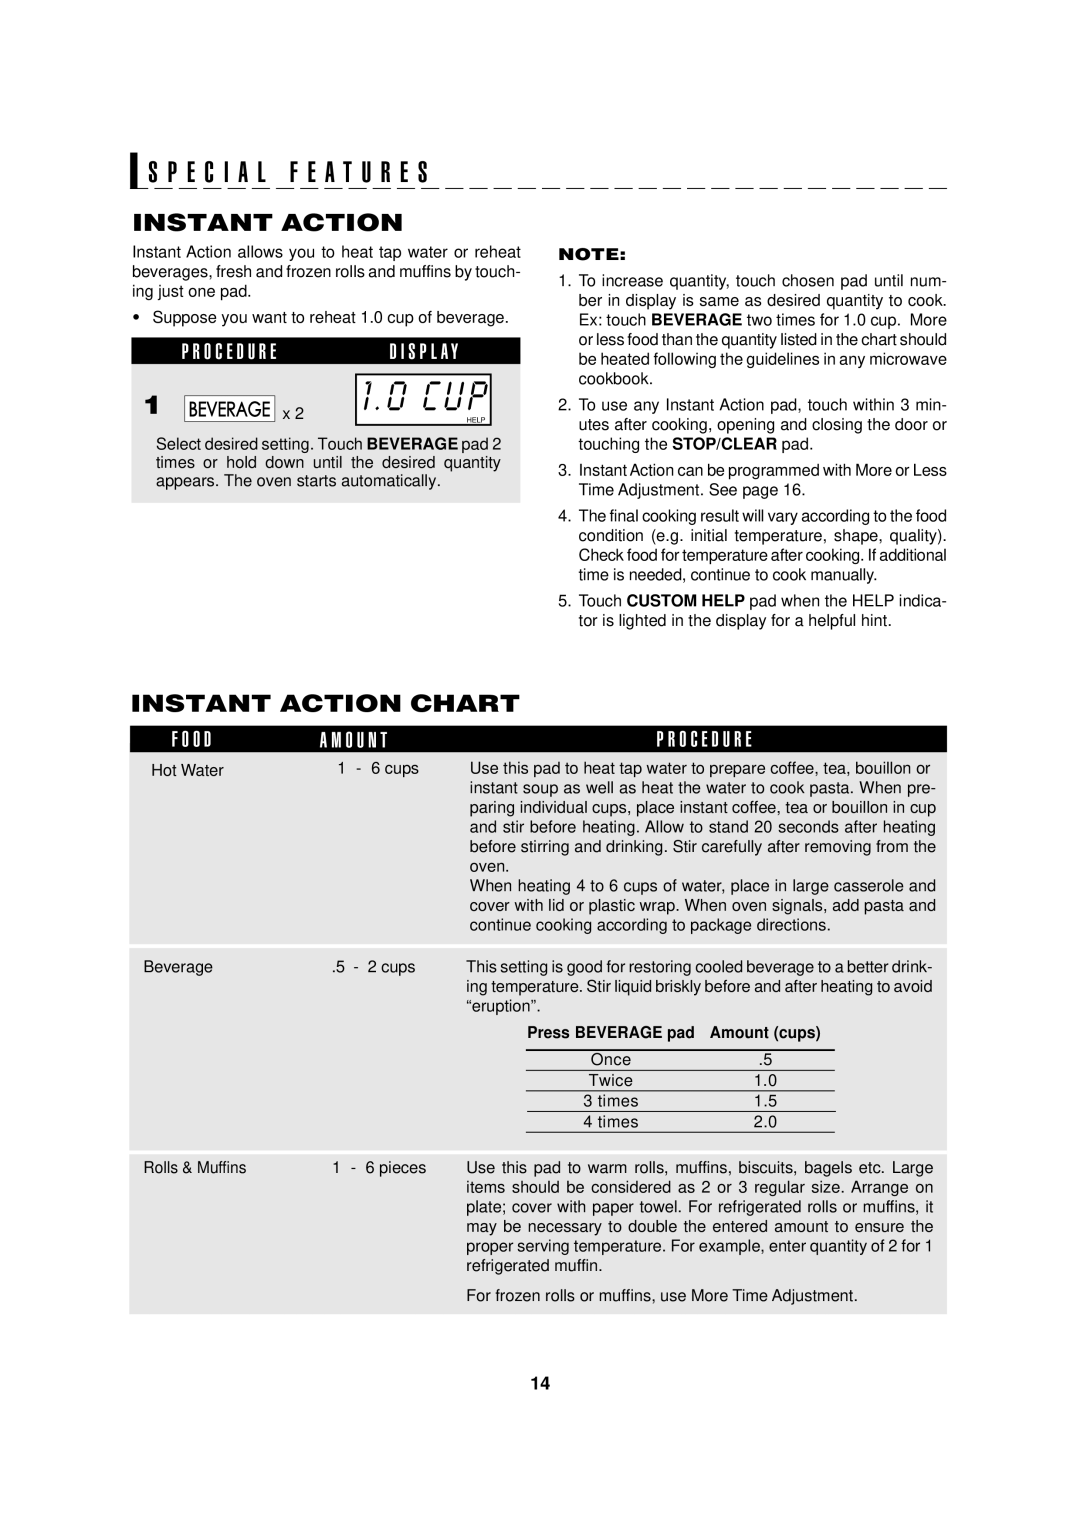 Food Quality Sensor R-320H Instant Action Chart, S P E C I A L F E A T U R E S, 1 . 0 C U P, P R O C E D U R E 